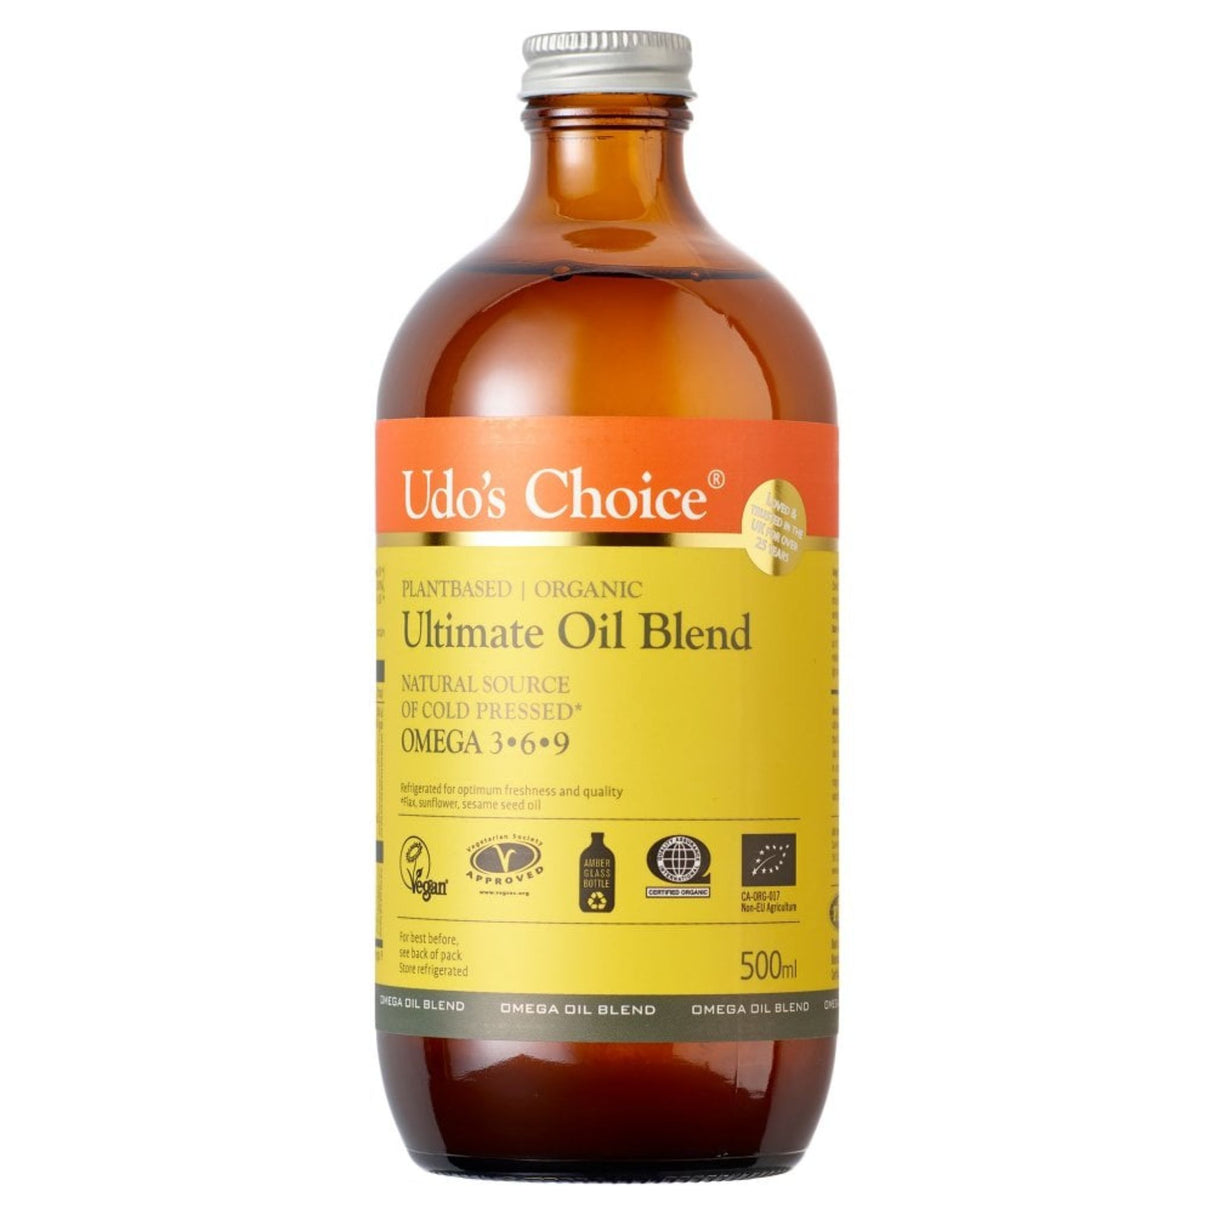 Udos Choice Oil Blend 500ml